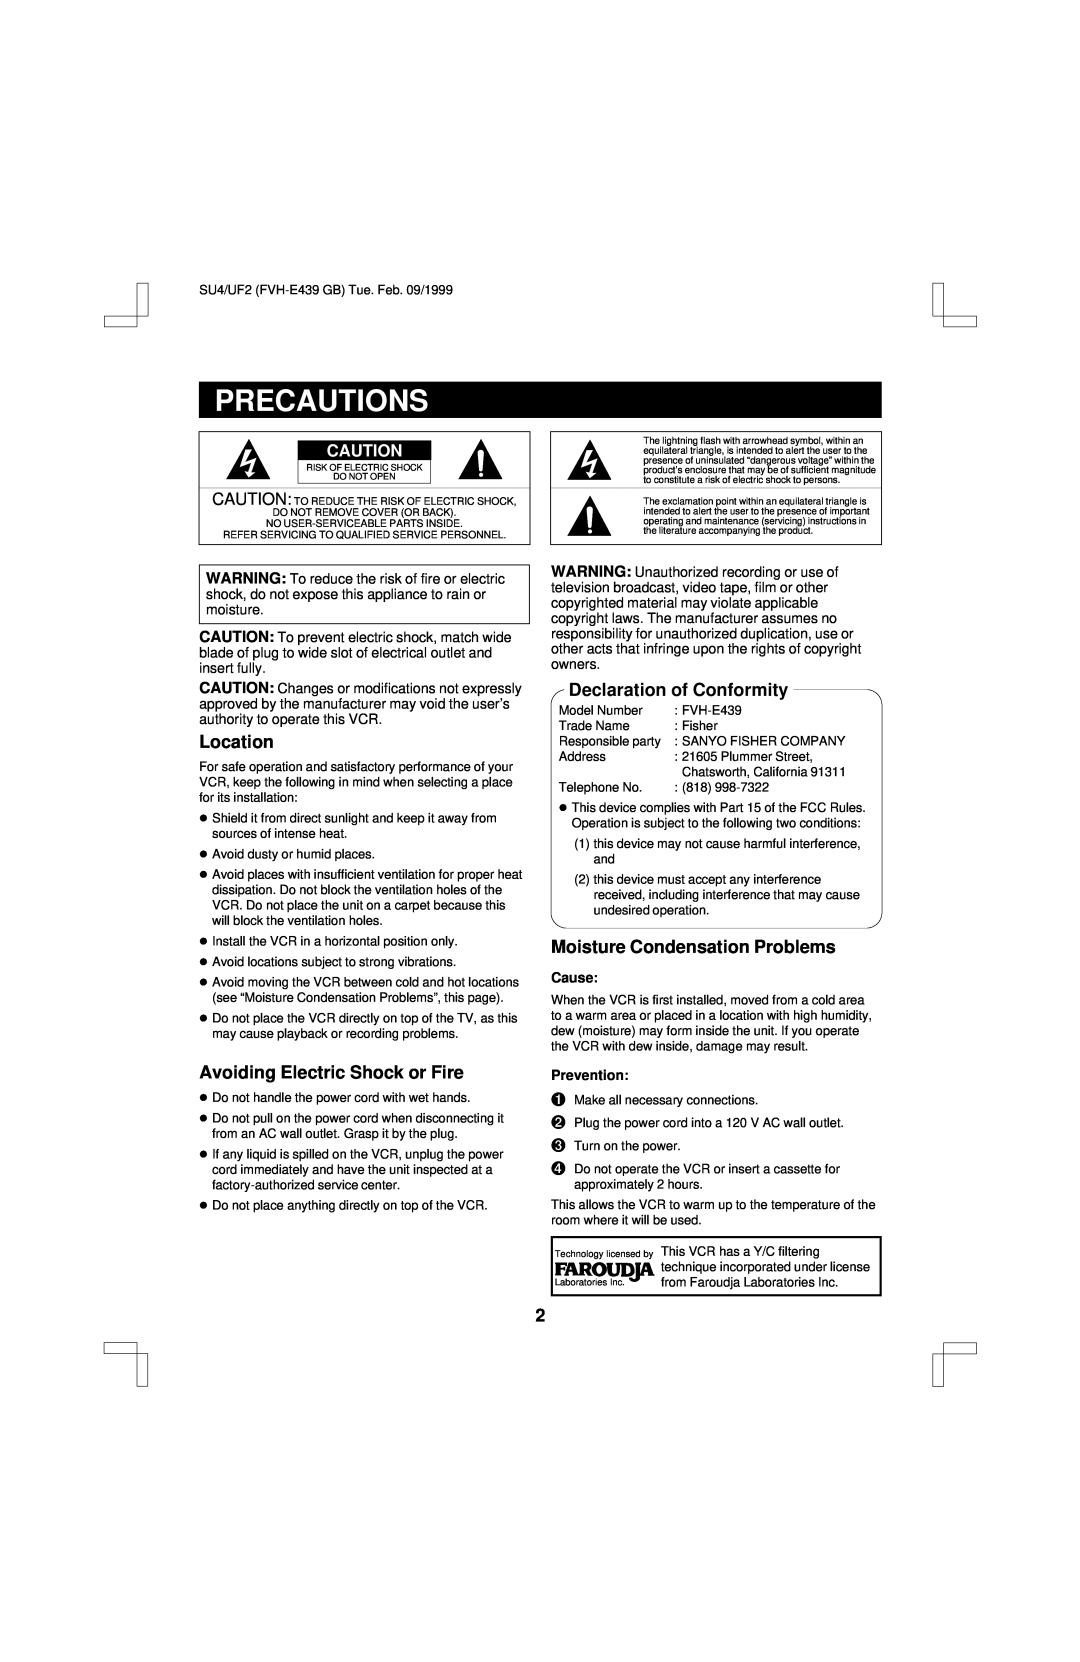 Fisher FVH-E439 Precautions, Location, Declaration of Conformity, Moisture Condensation Problems, Cause, Prevention 